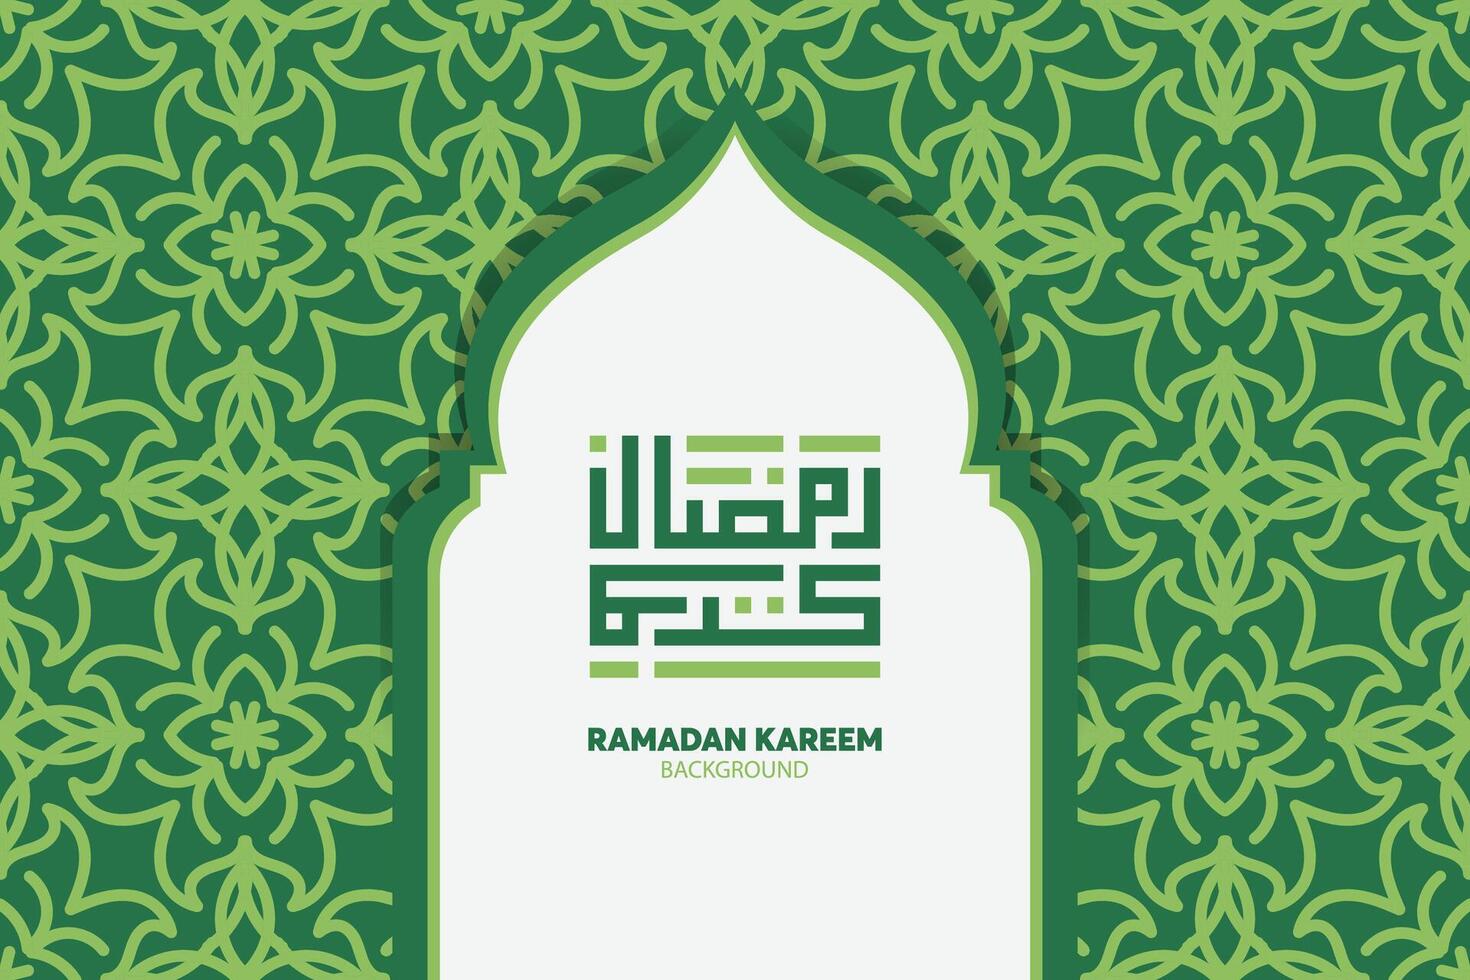 ramadan kareem arabische kalligrafie. islamischer monat ramadan im arabischen logo-grußdesign vektor